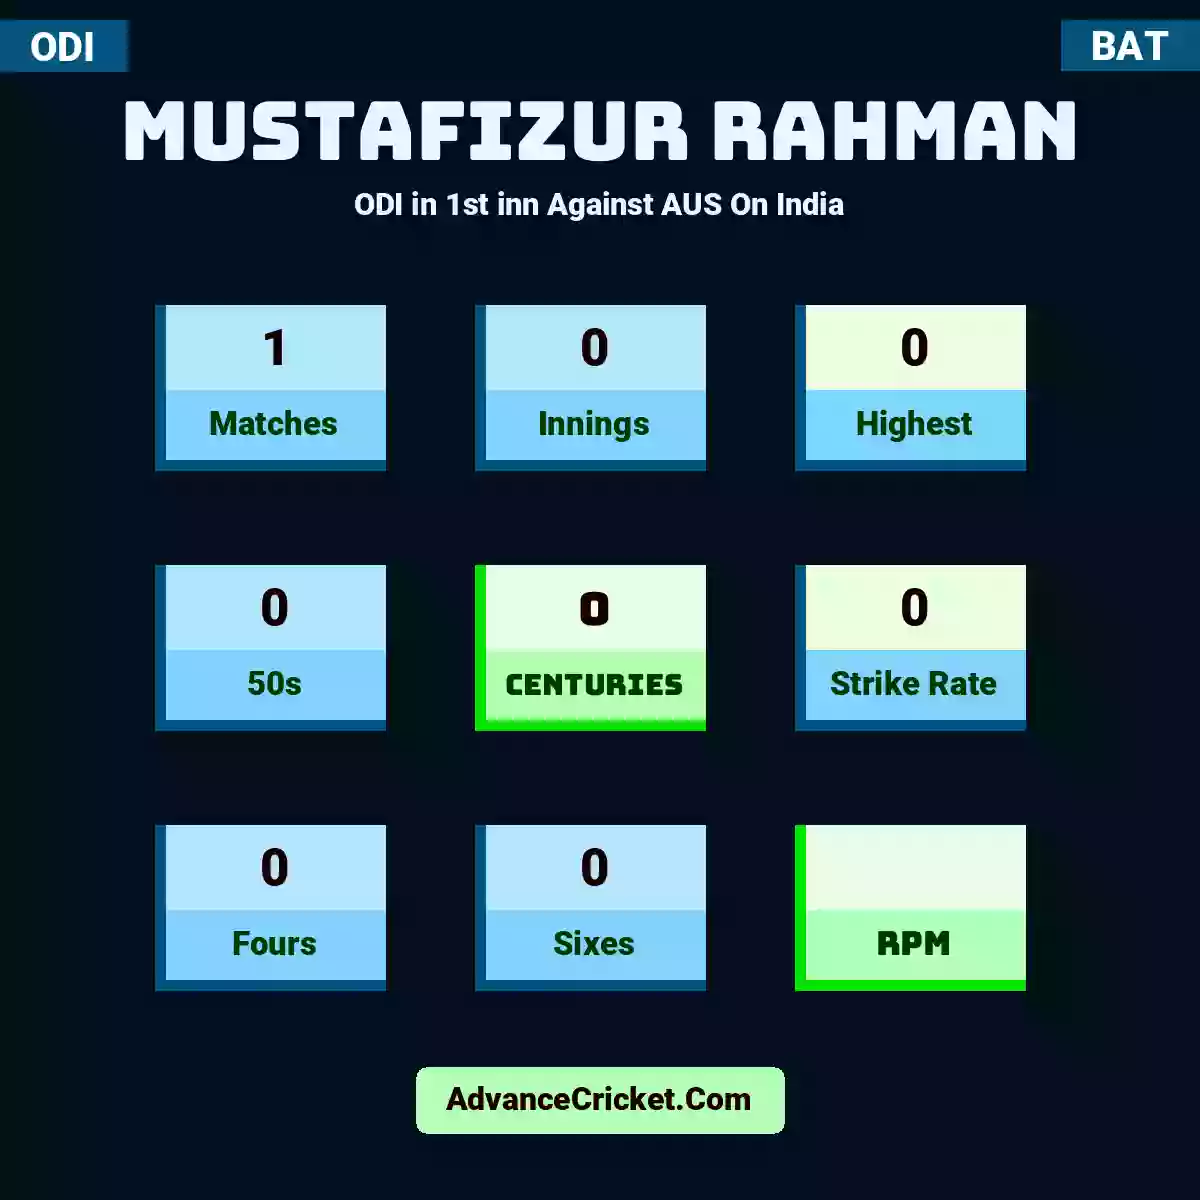 Mustafizur Rahman ODI  in 1st inn Against AUS On India, Mustafizur Rahman played 1 matches, scored 0 runs as highest, 0 half-centuries, and 0 centuries, with a strike rate of 0. M.Rahman hit 0 fours and 0 sixes.